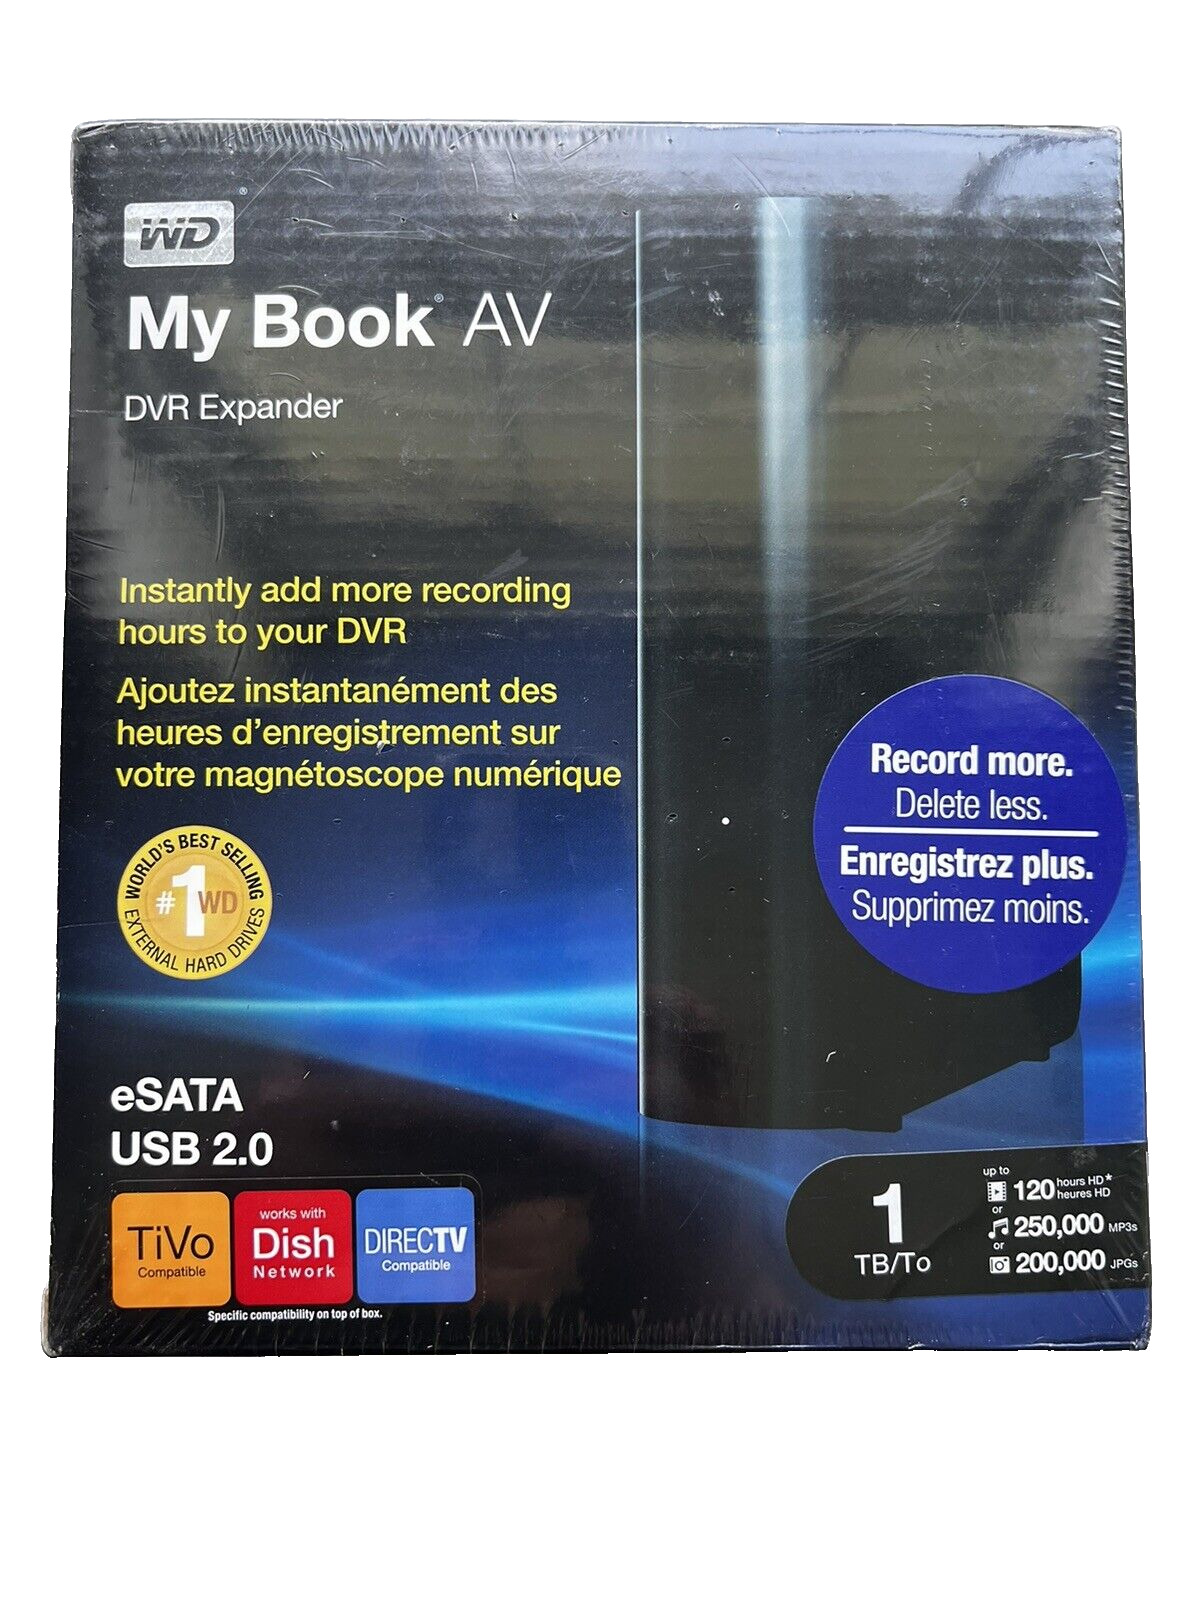 WD My Book AV DVR Expander 1TB USB 2.0 & eSATA Hard Drive - New in Box Sealed